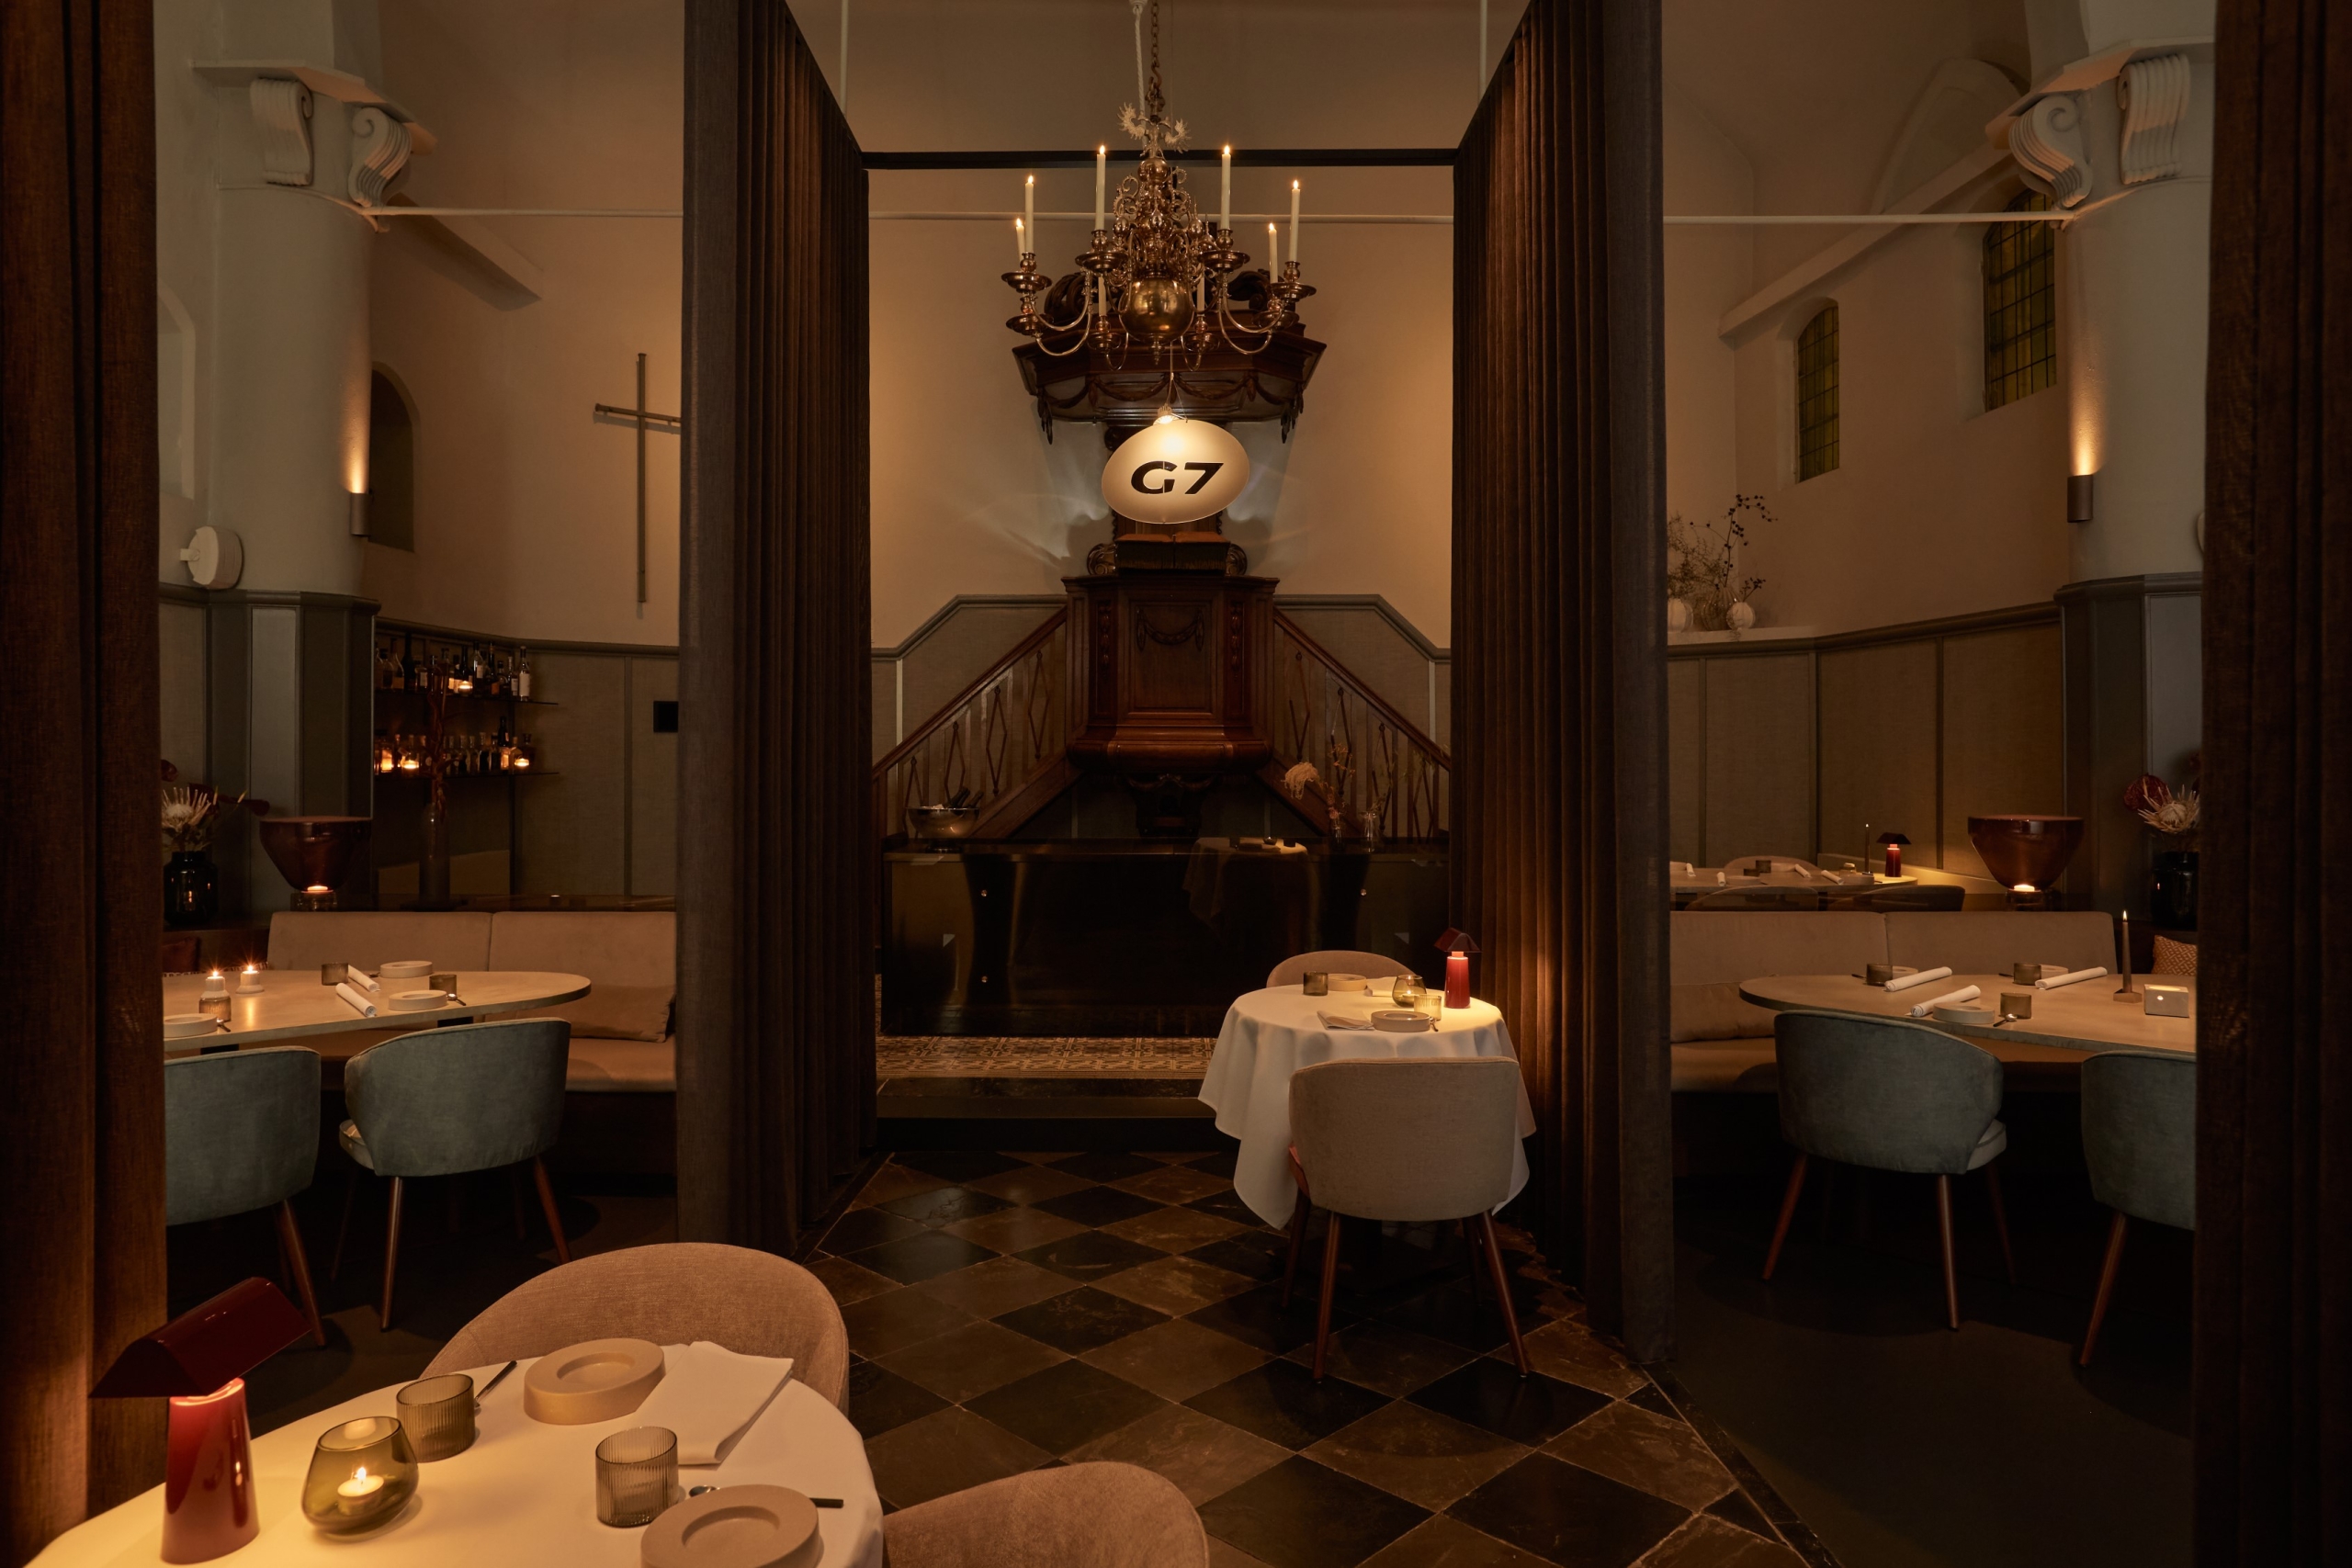 g7 restaurant, nieuw interieur, euro-toques nederland